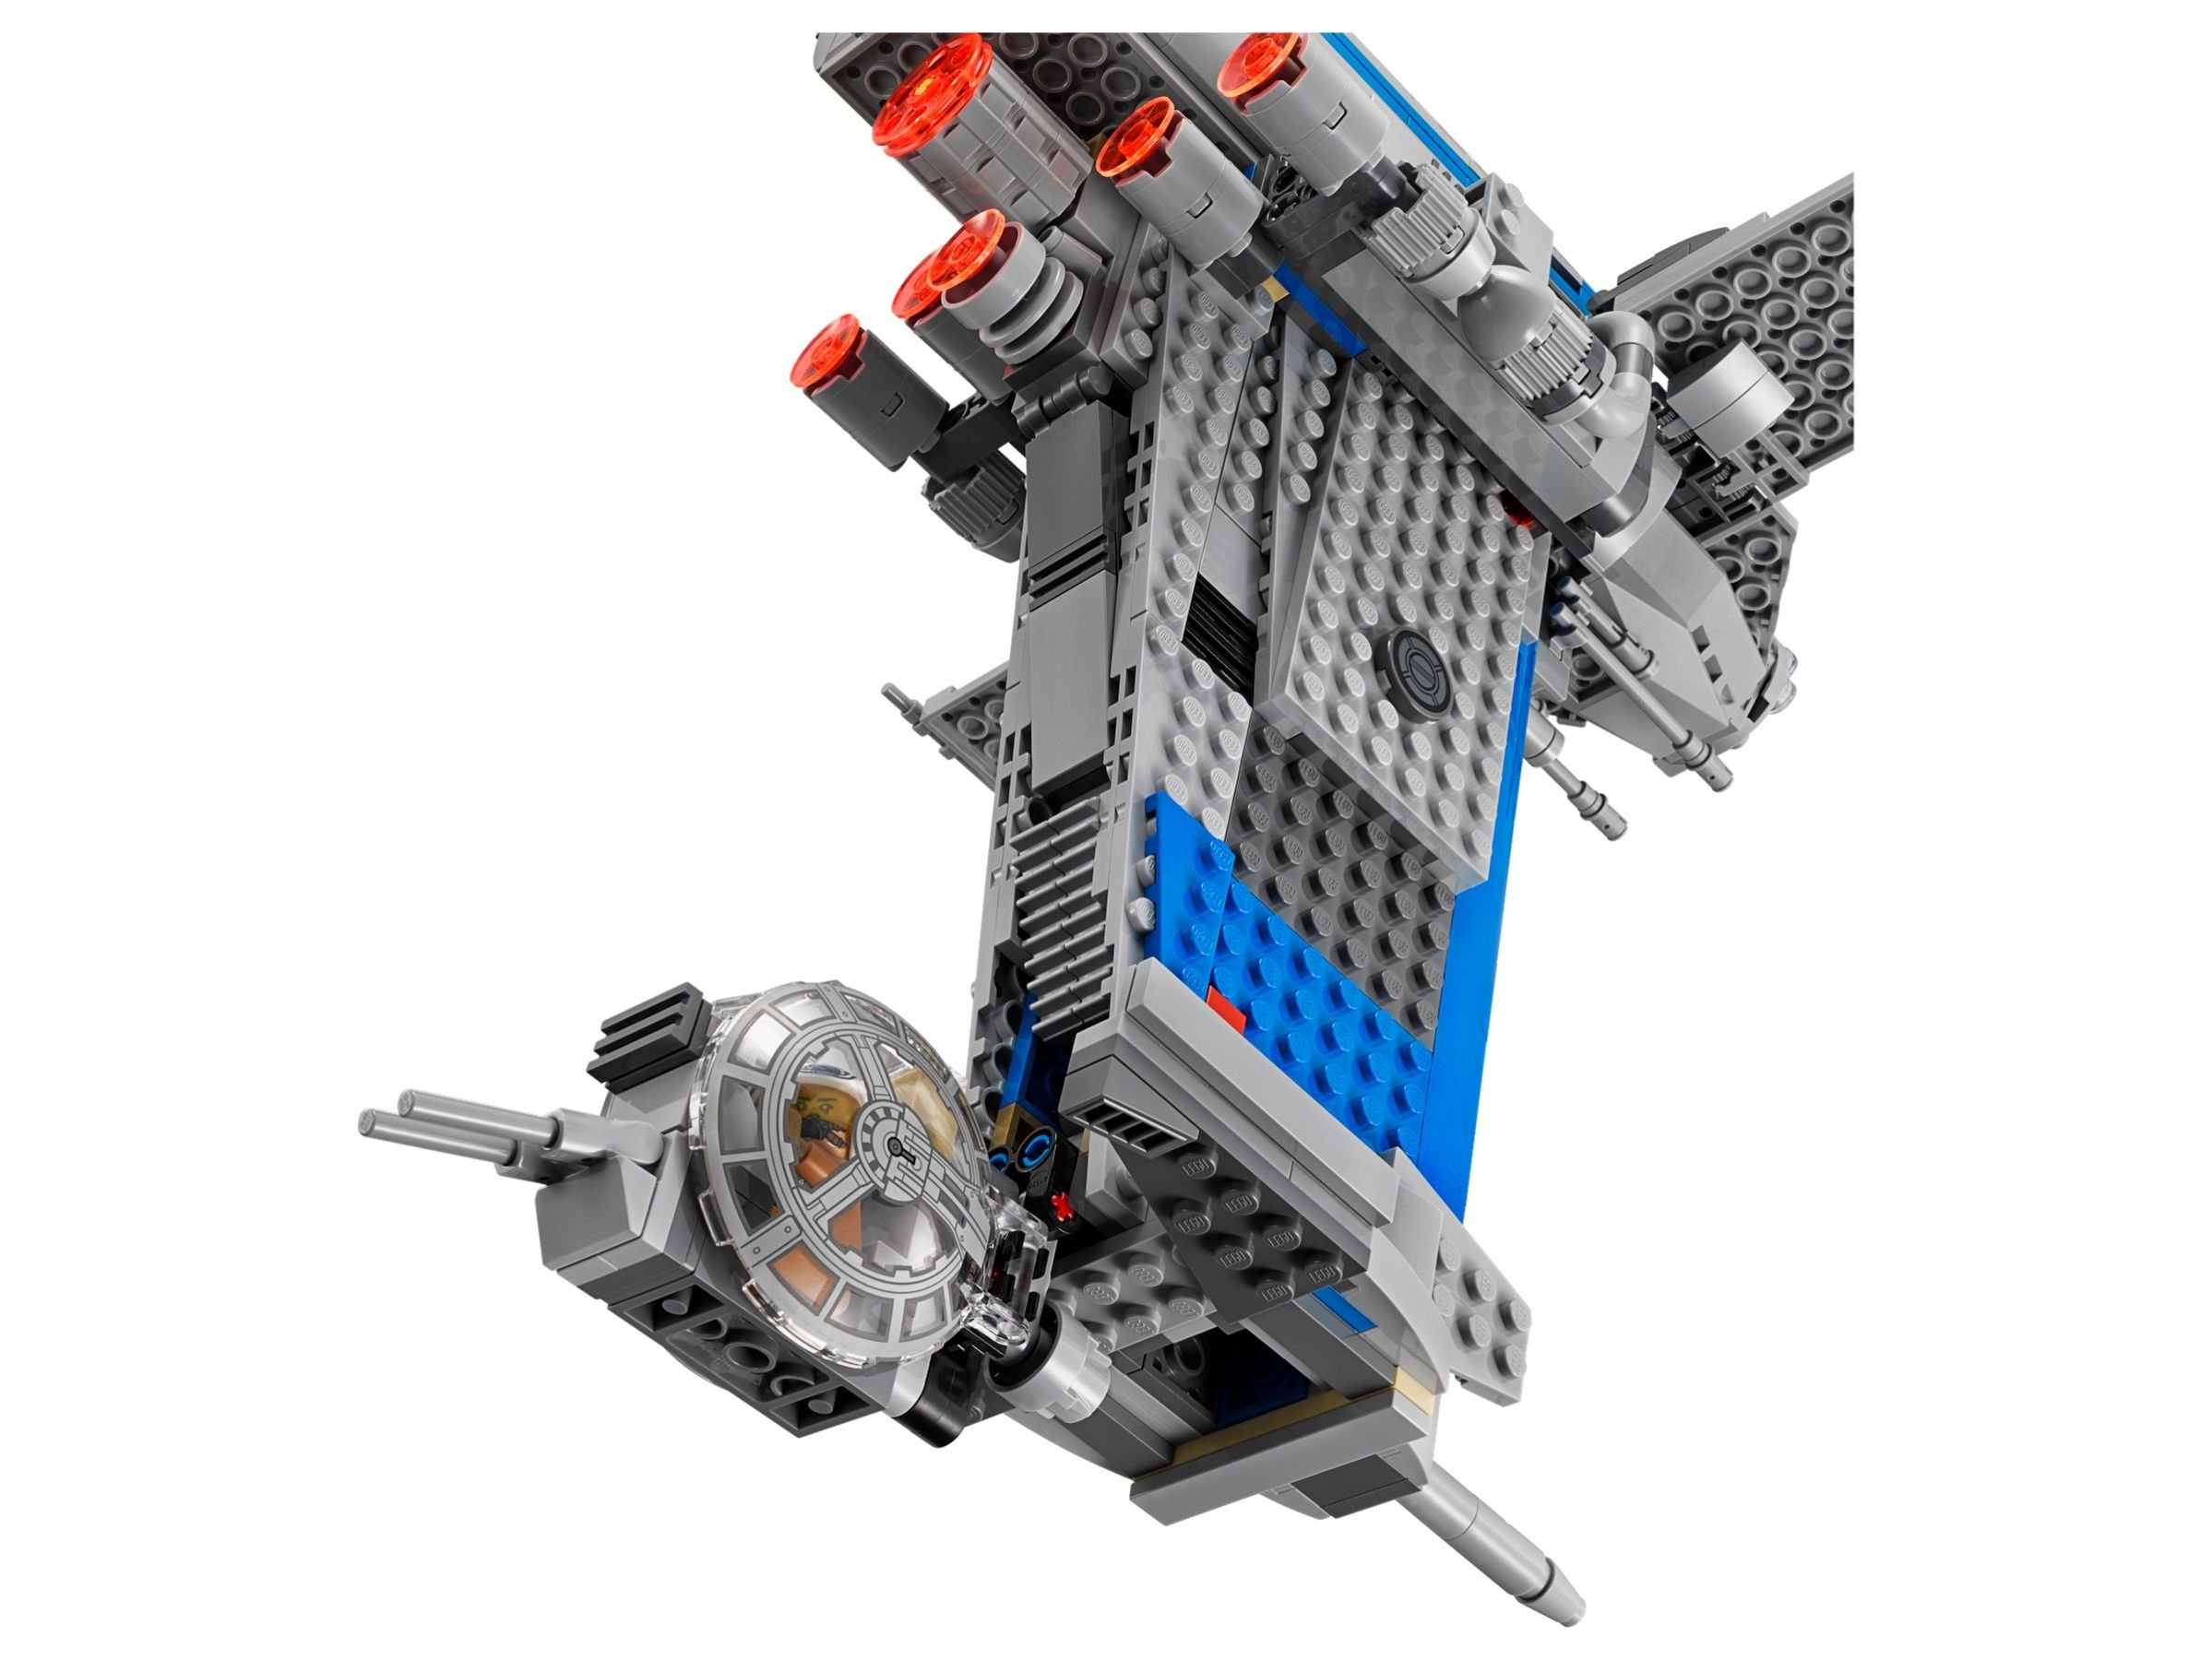 LEGO Star Wars 75188 Resistance Bomber LEGO_75188_alt6.jpg